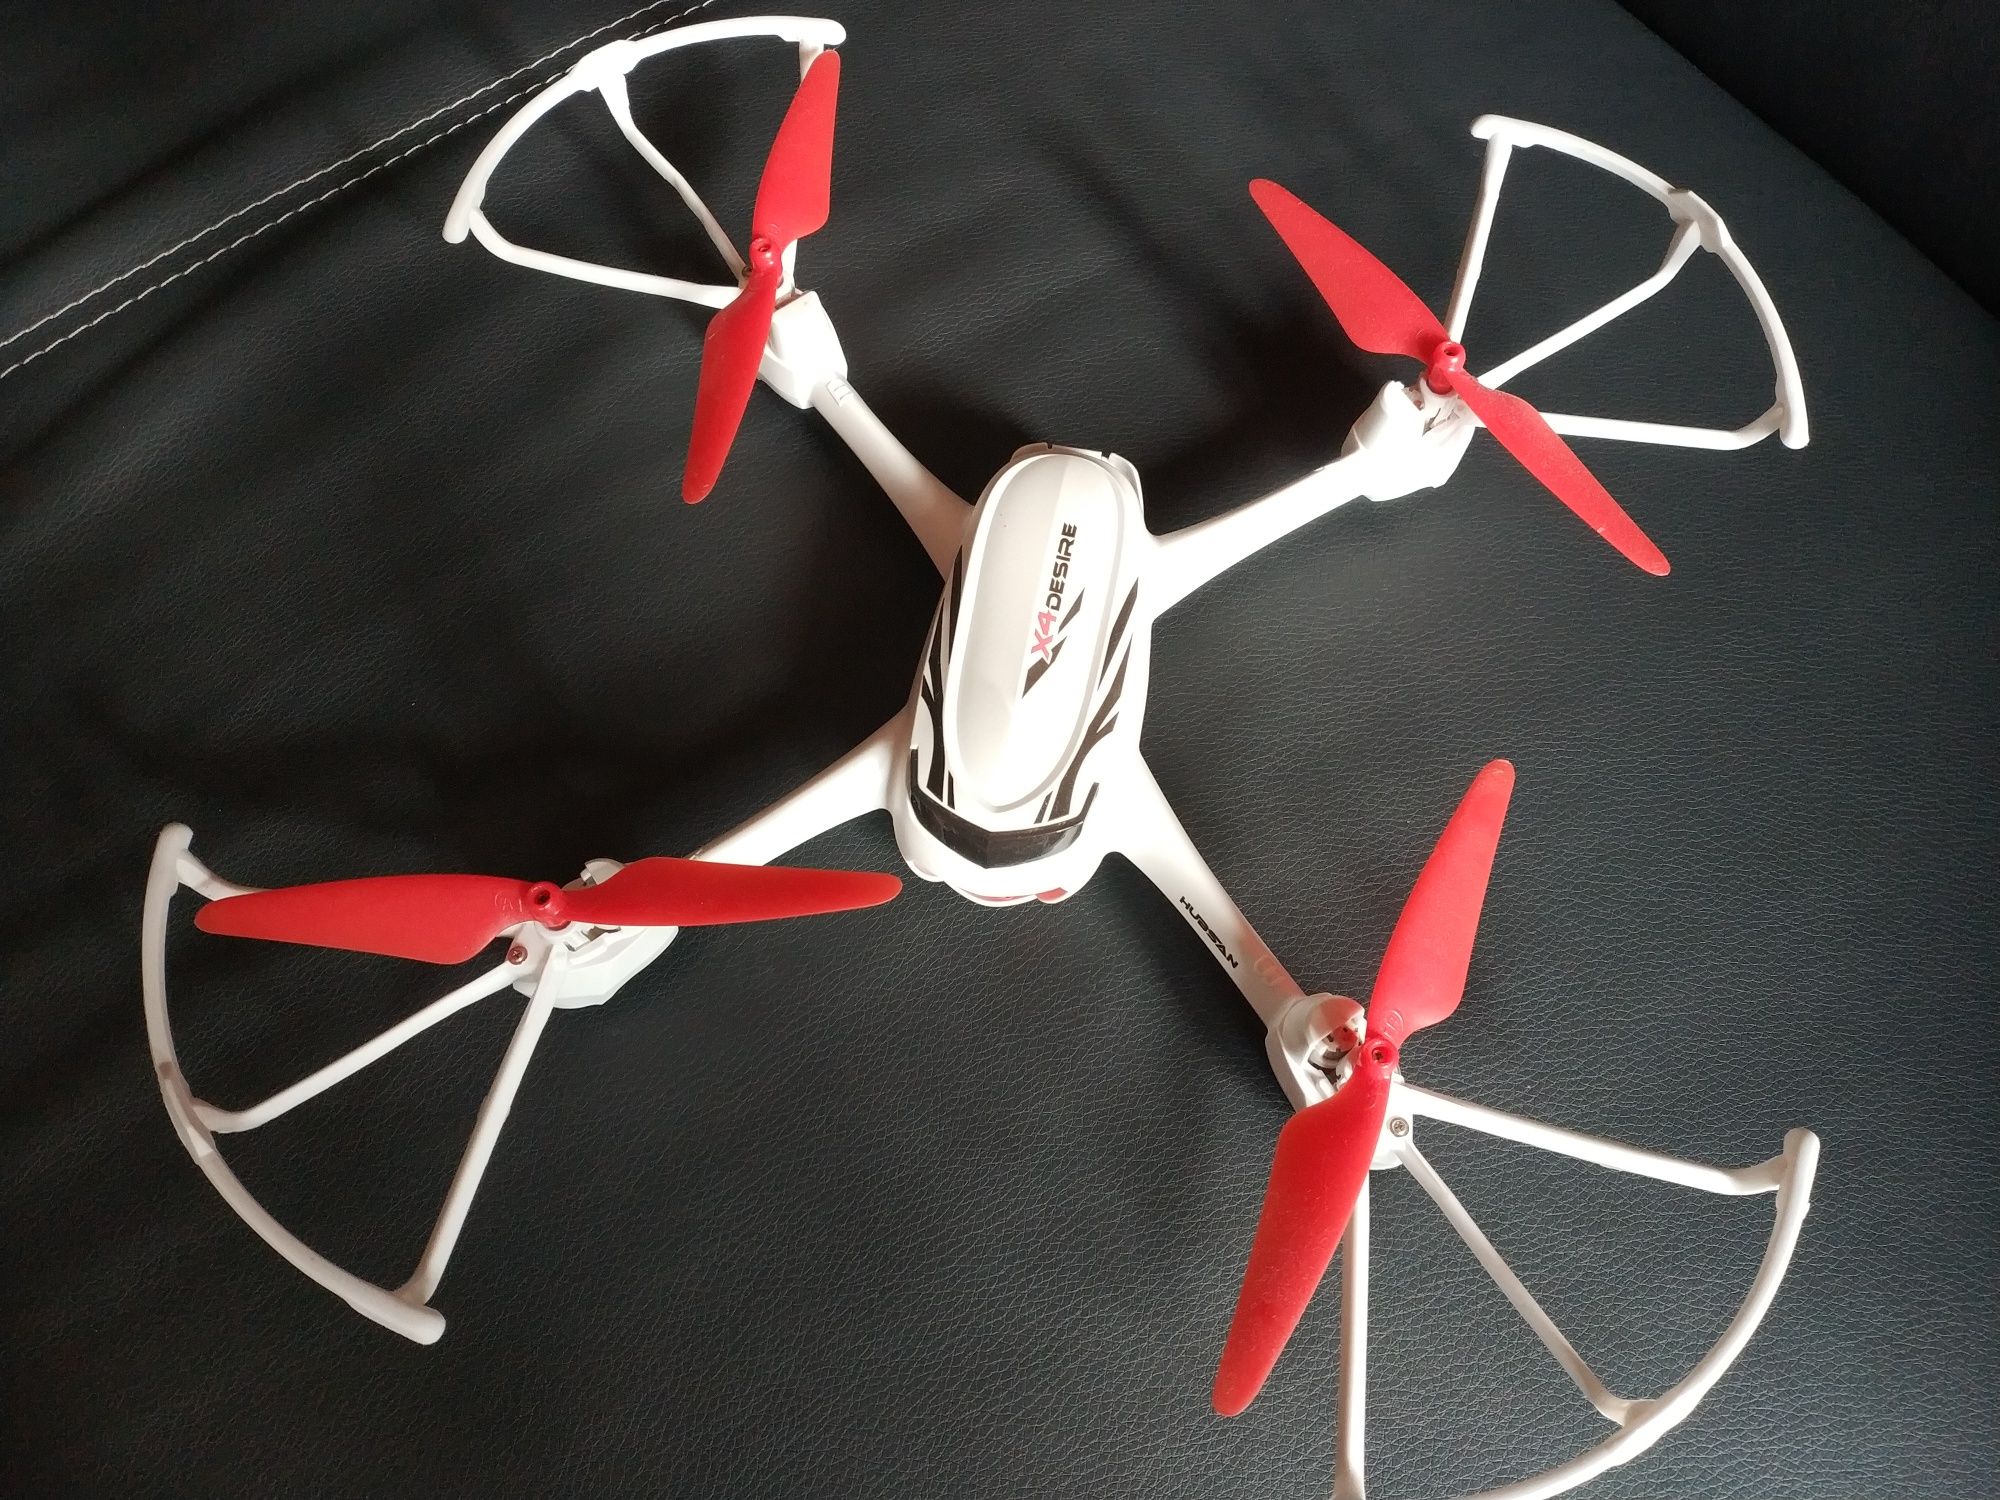 Dron Hubsun X4 Desire GPS